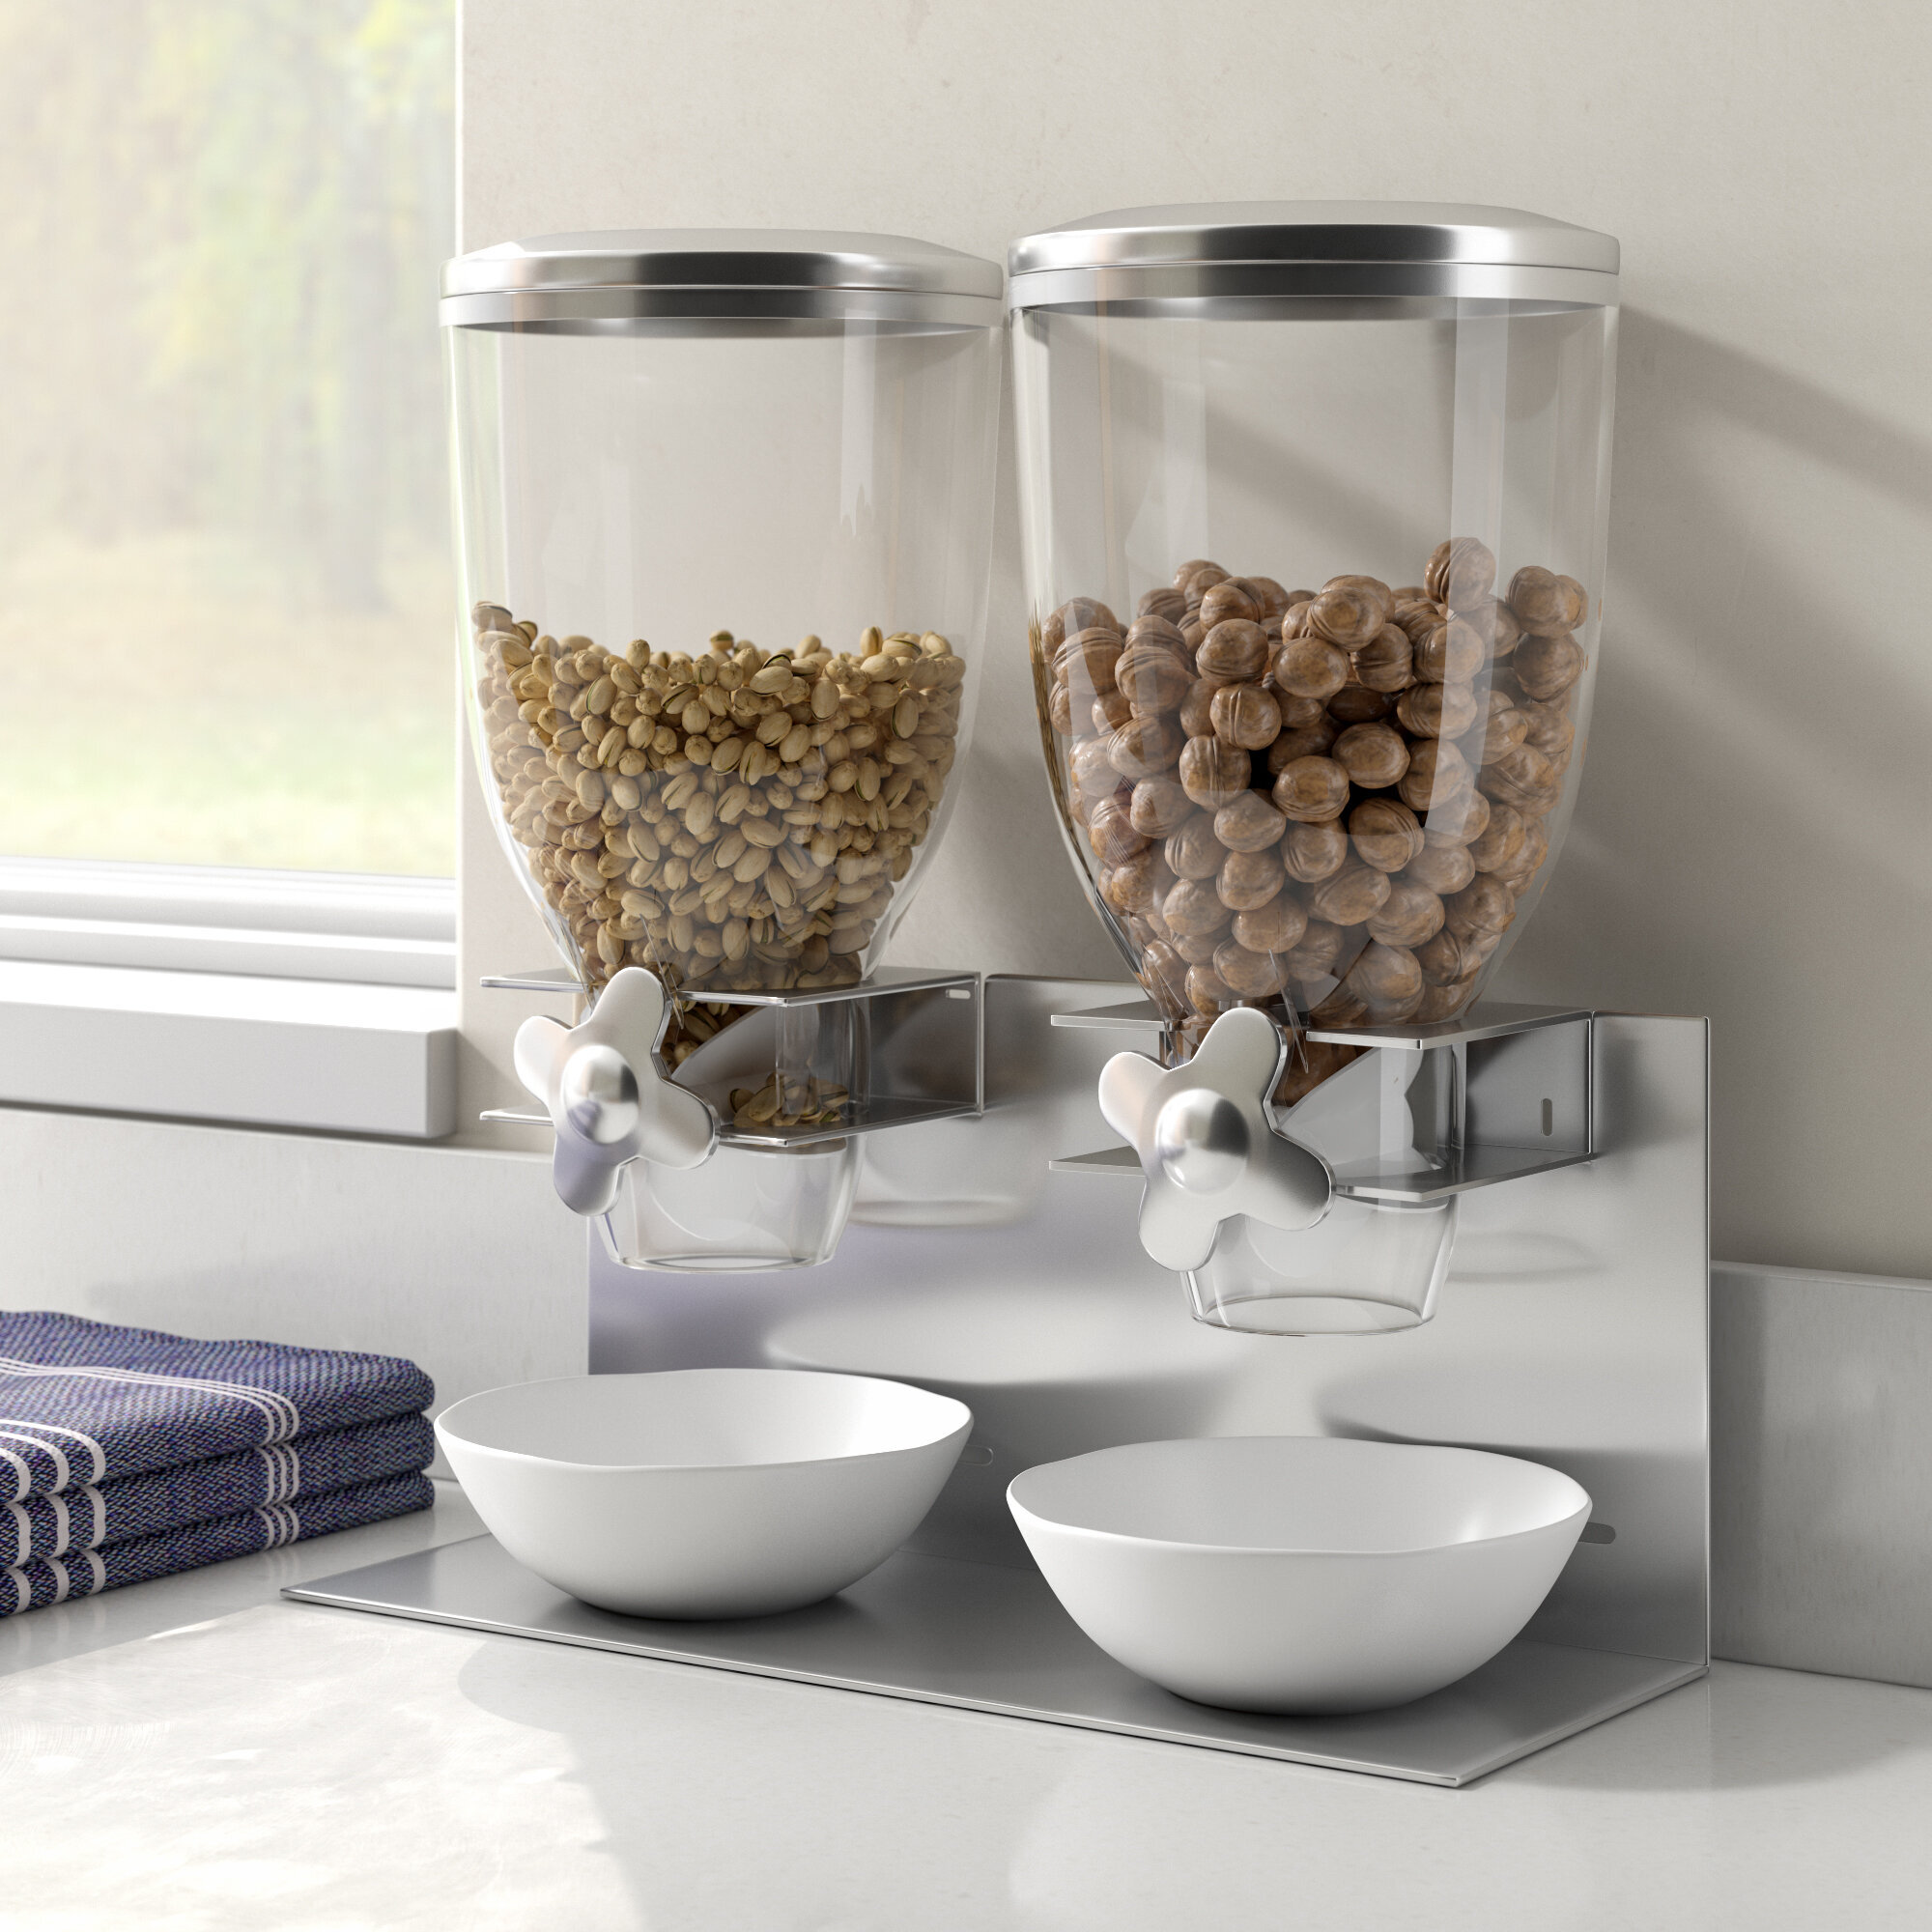 Cereal Dispenser Food Dispenser Space Saving for Pantry Kitchen Cereal  Green 